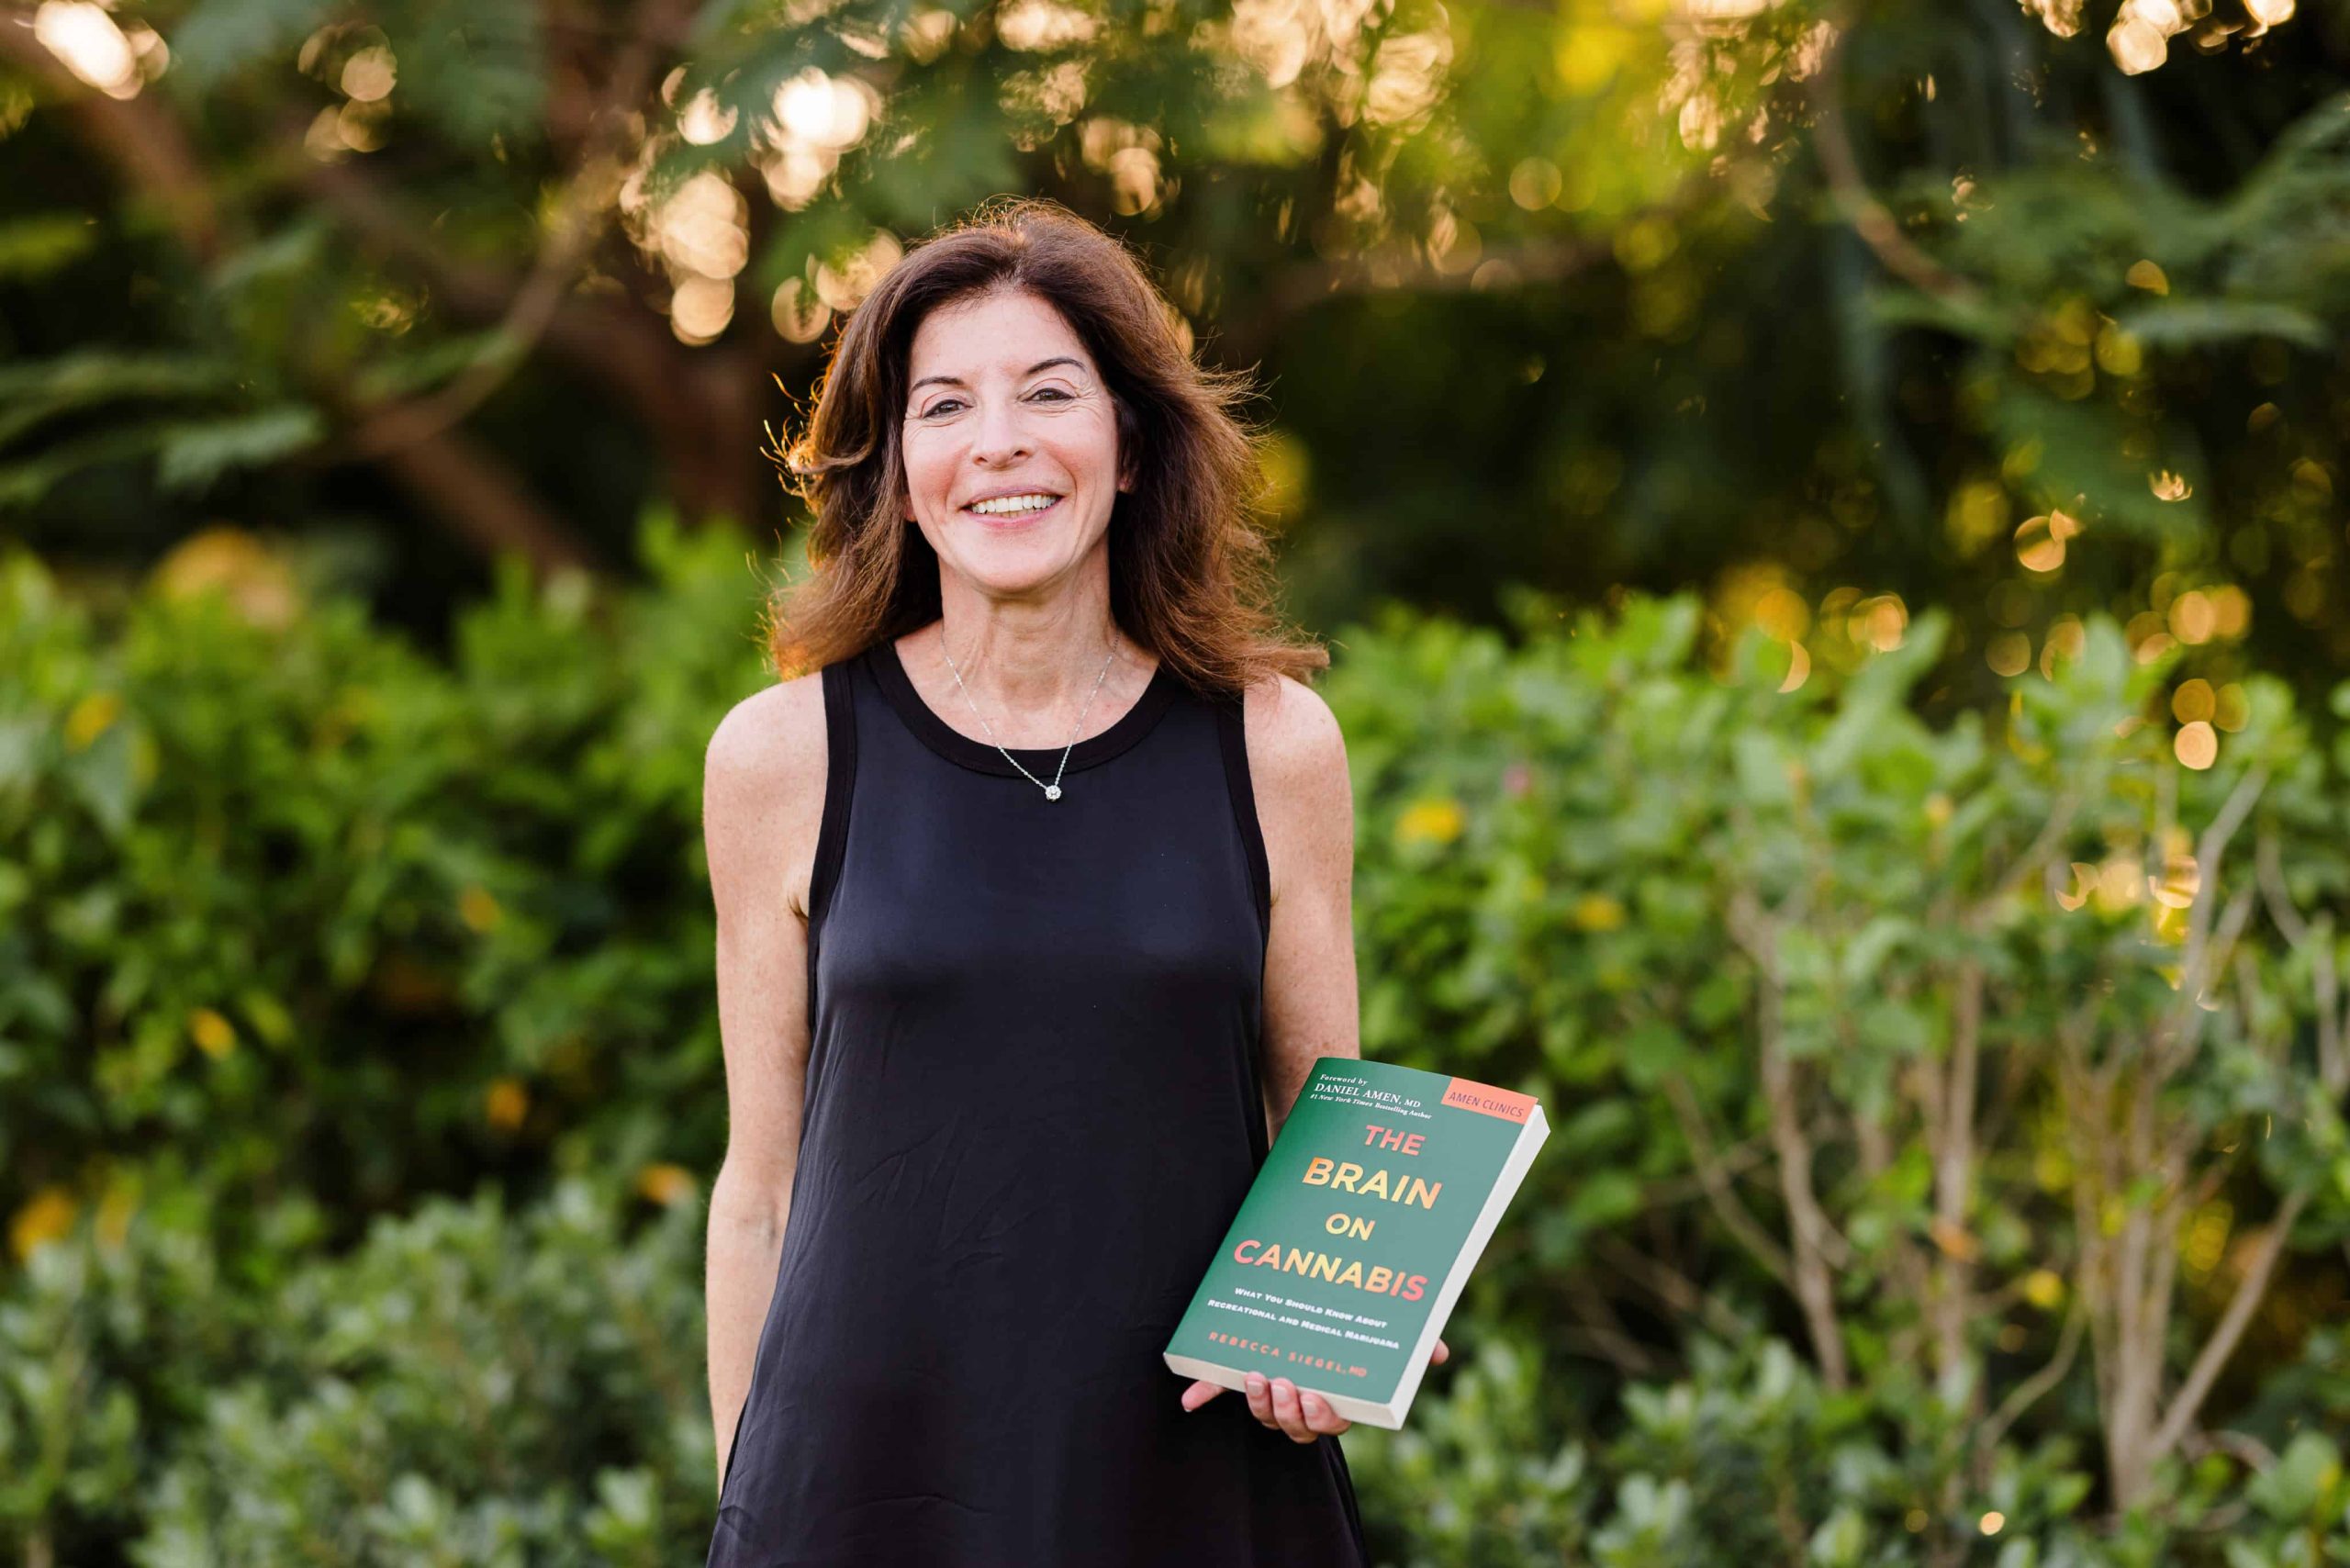 Higher Profile: Dr. Rebecca Siegel, Author, The Brain on Cannabis